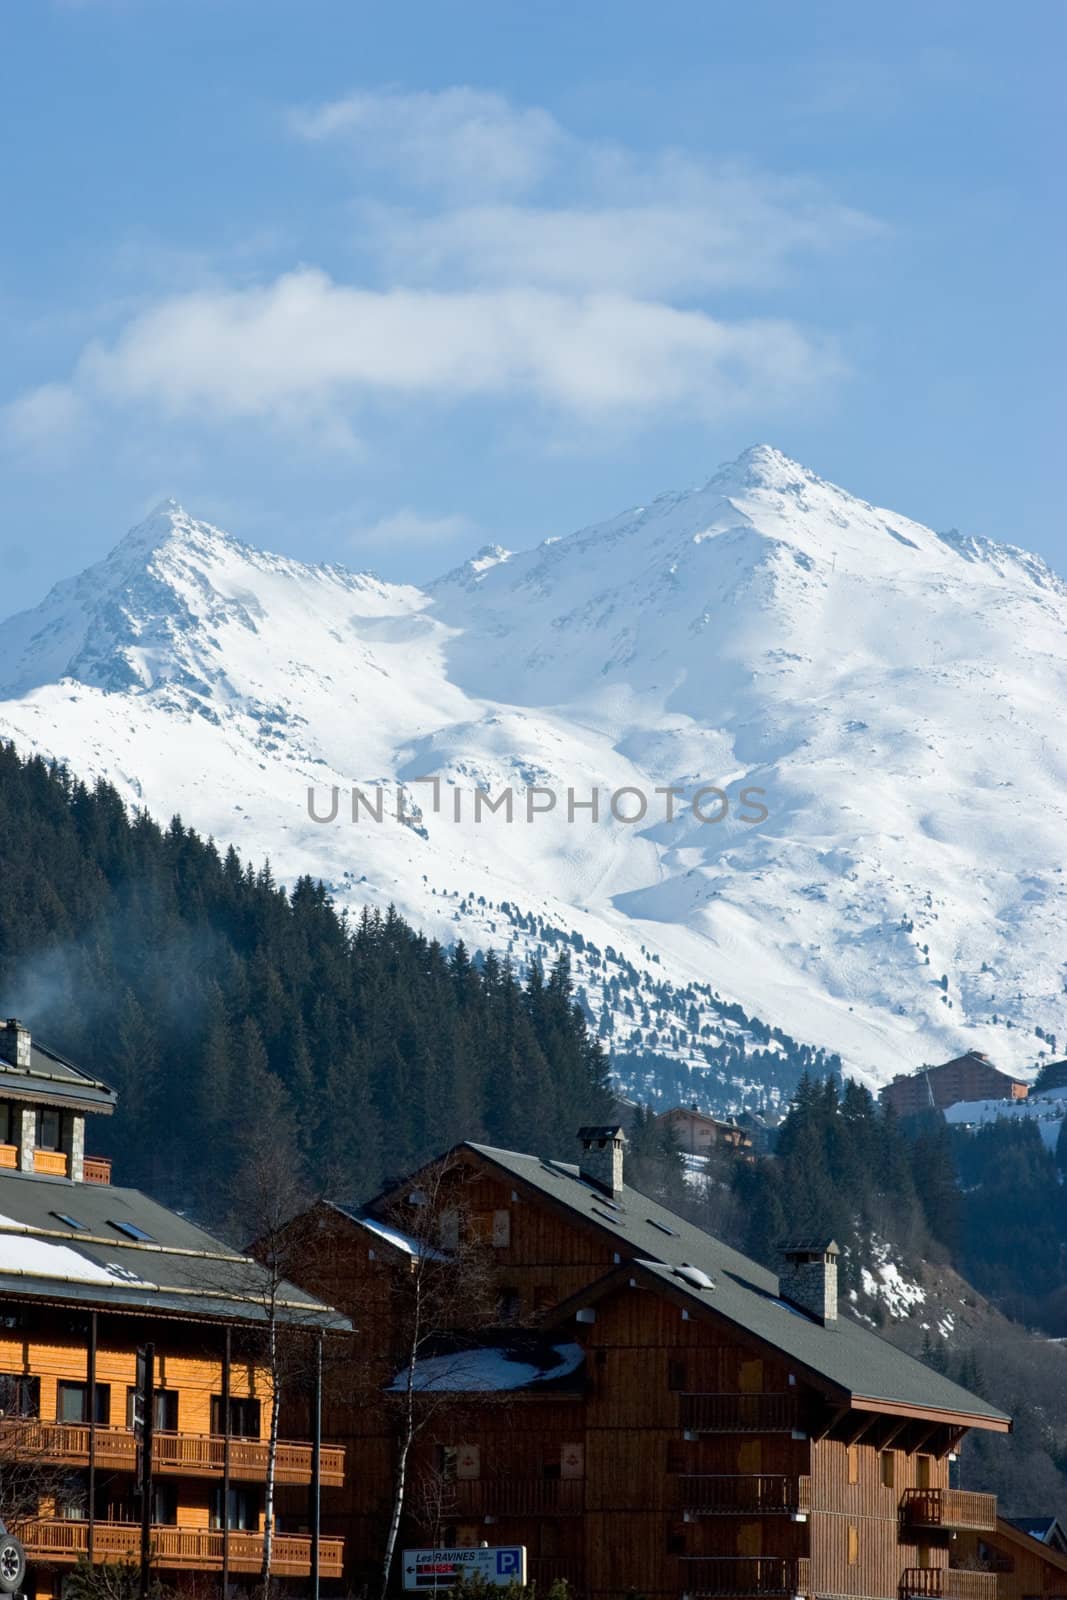 A view of the Meribel ski resort, French Alps